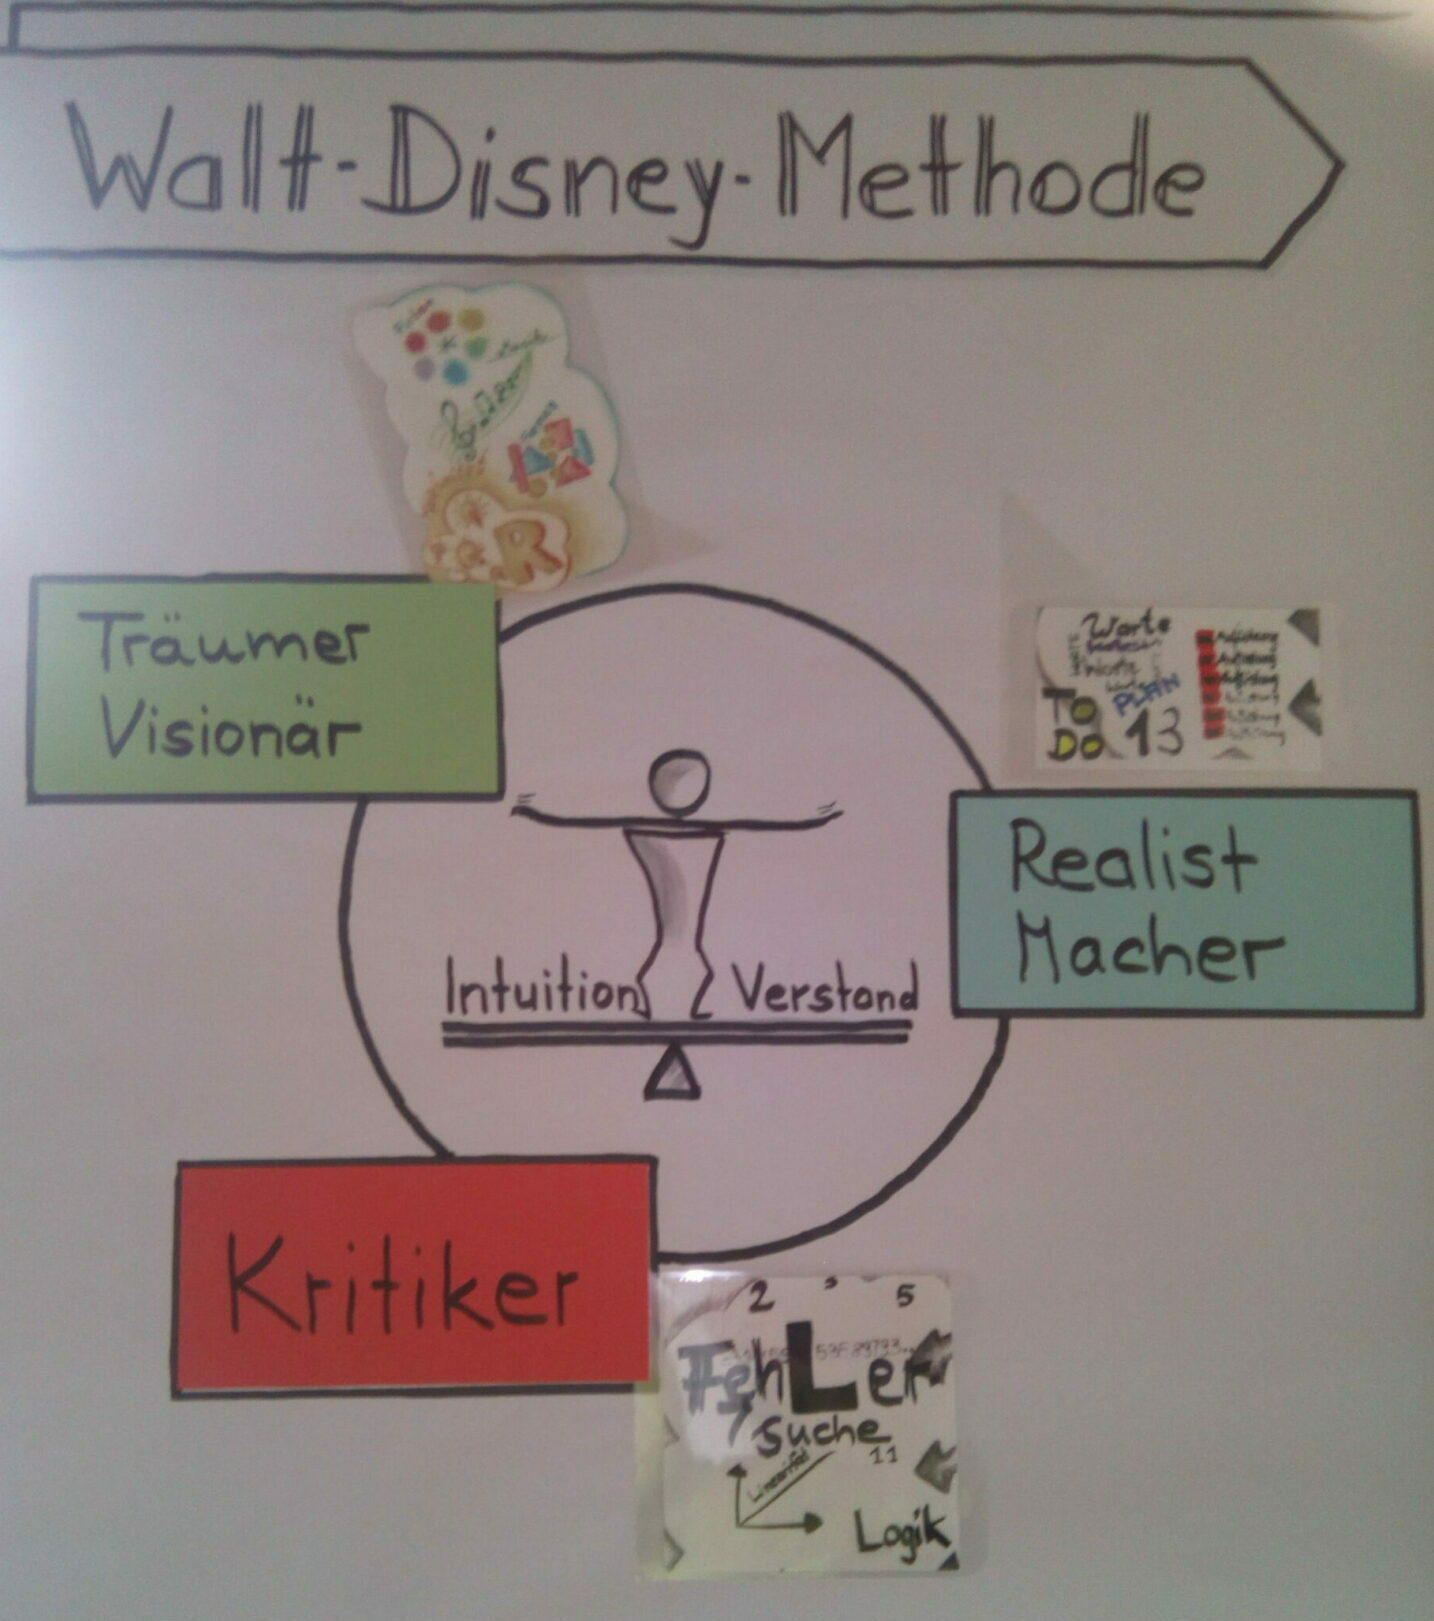 Walt-Disney-Methode